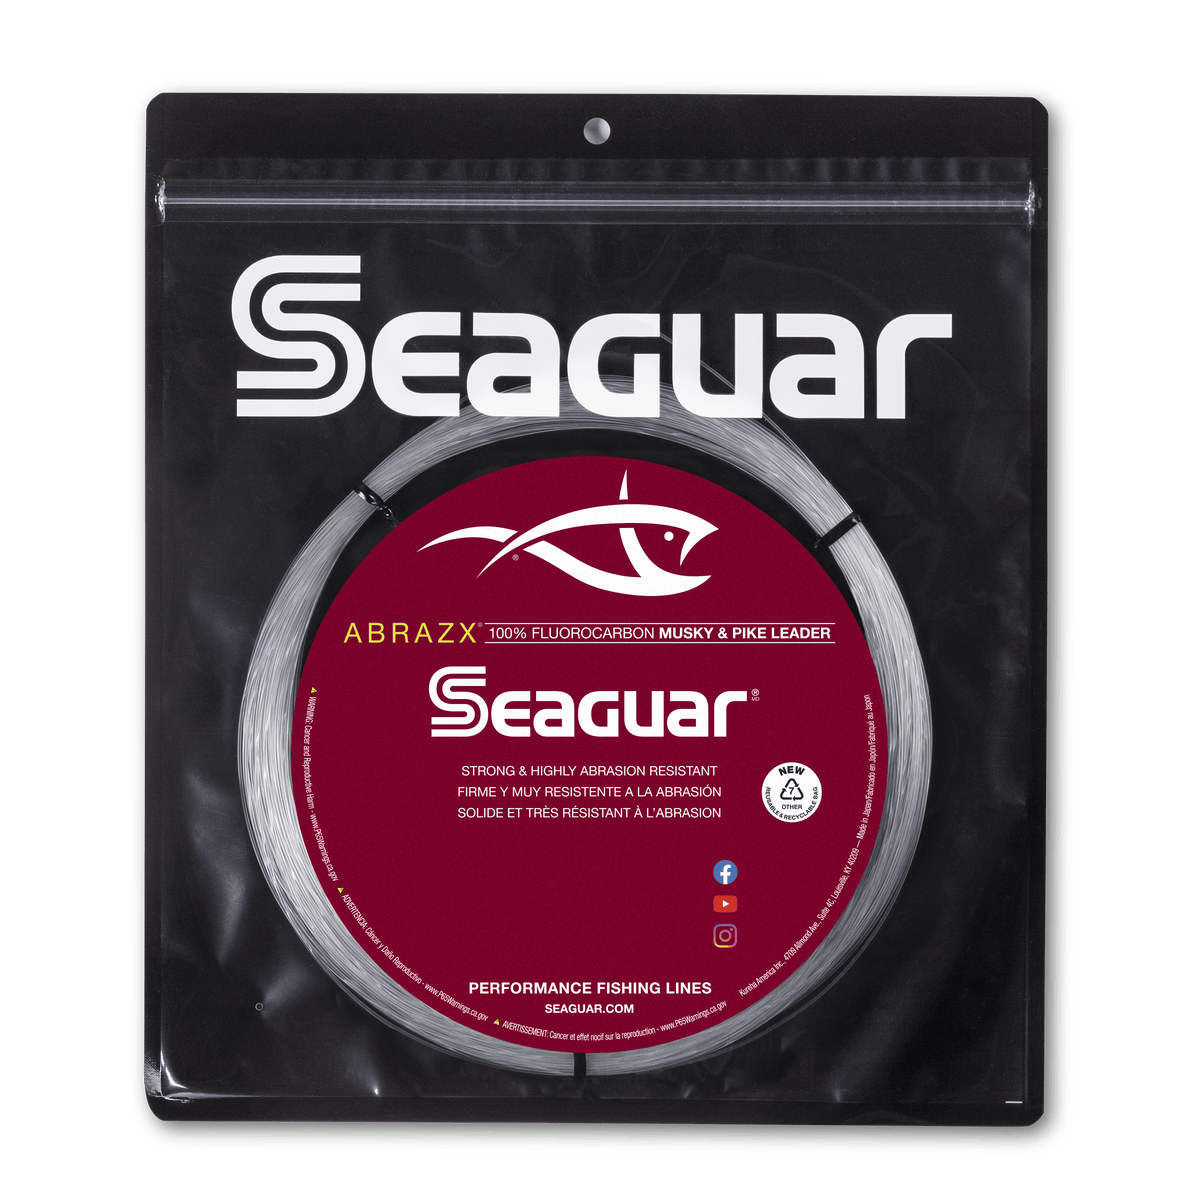 Seaguar Pink Label Fishing Line 25 40 lb